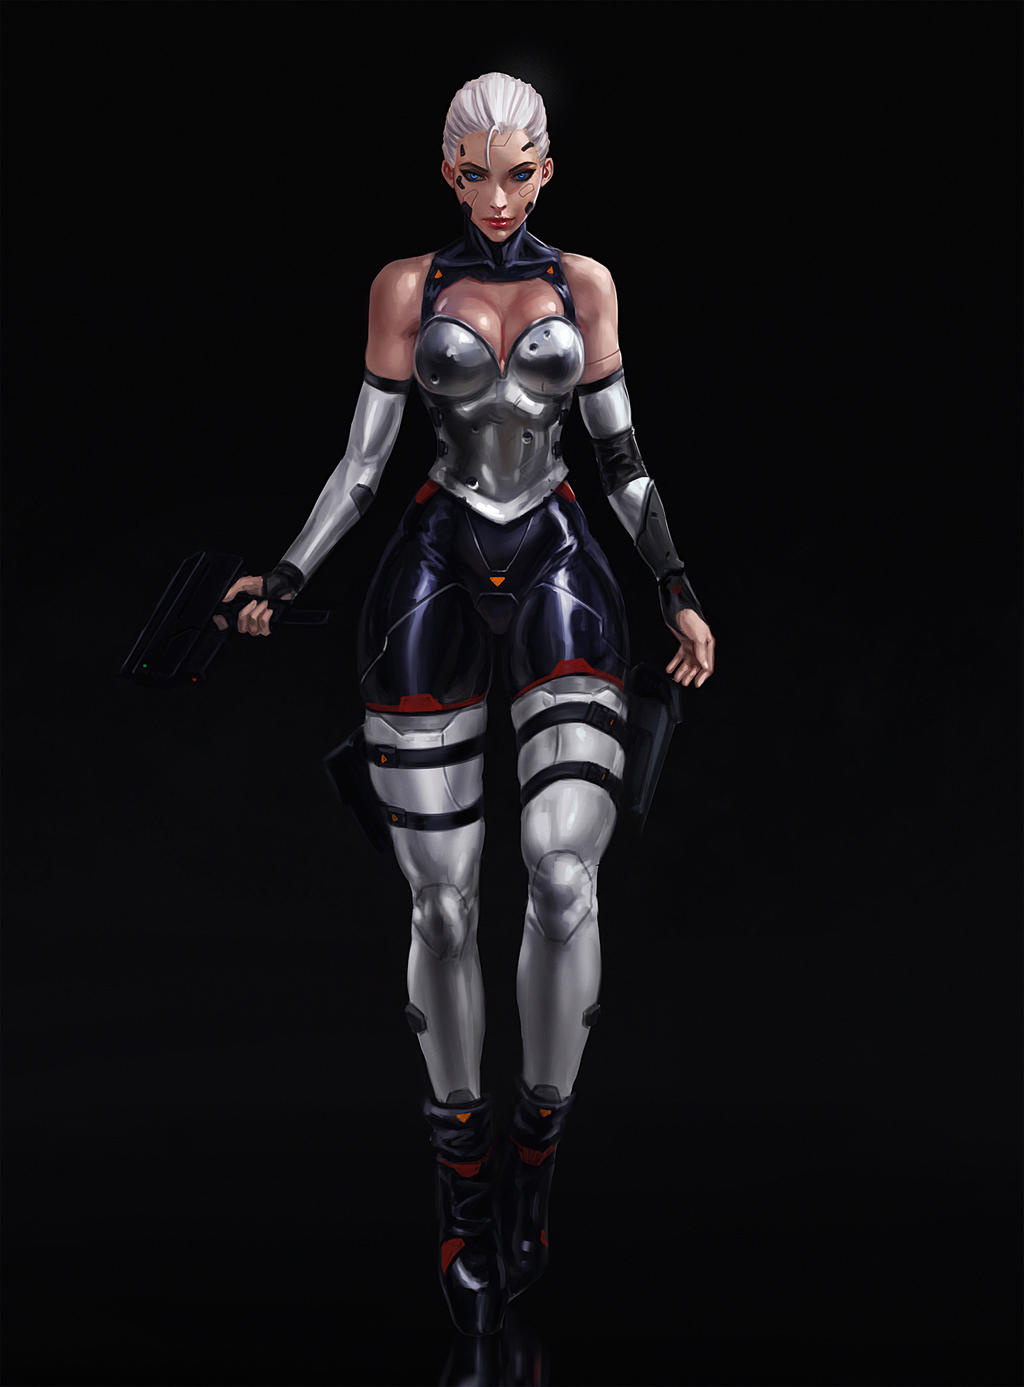 Cyberpunk Assassin by SalvadorTrakal Adult Pictures